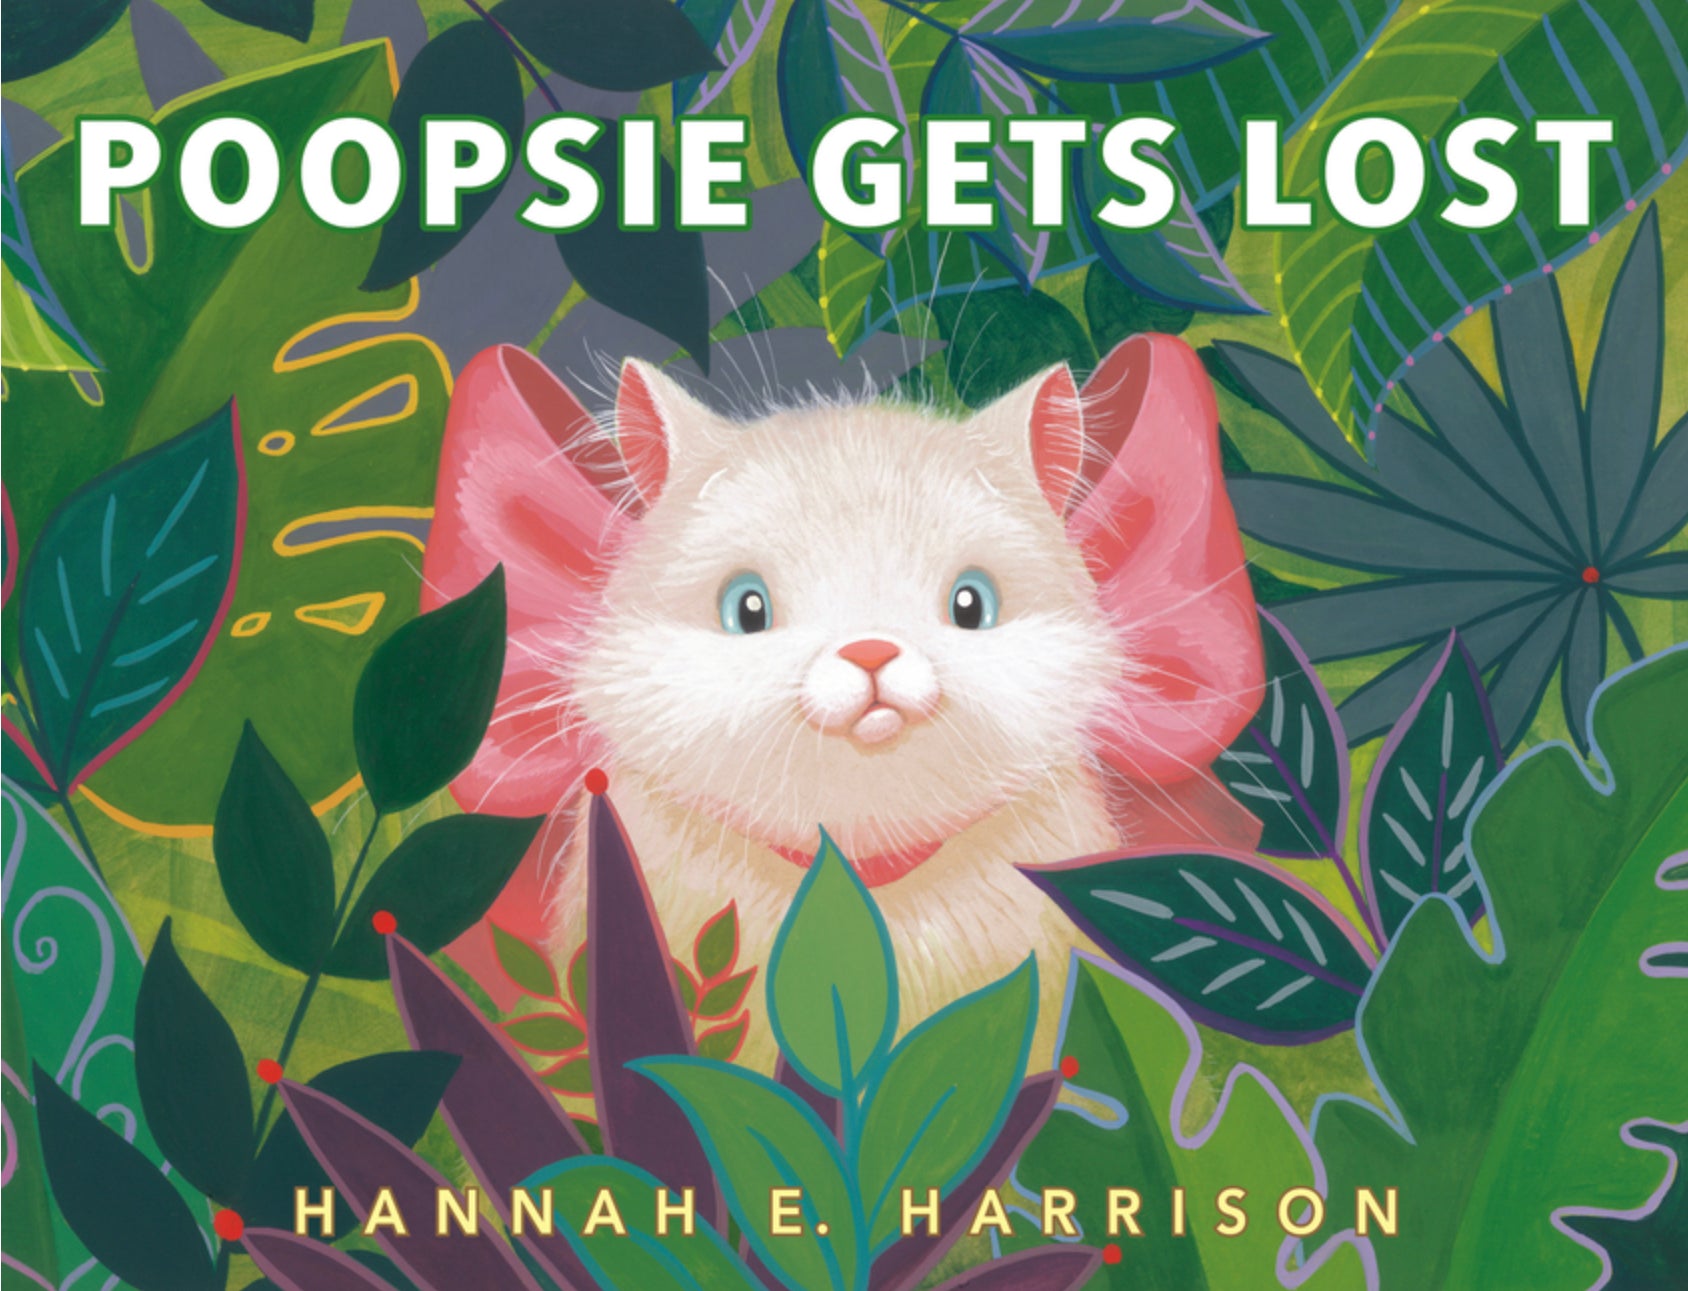 Poopsie Gets Lost, Hannah E. Harrison